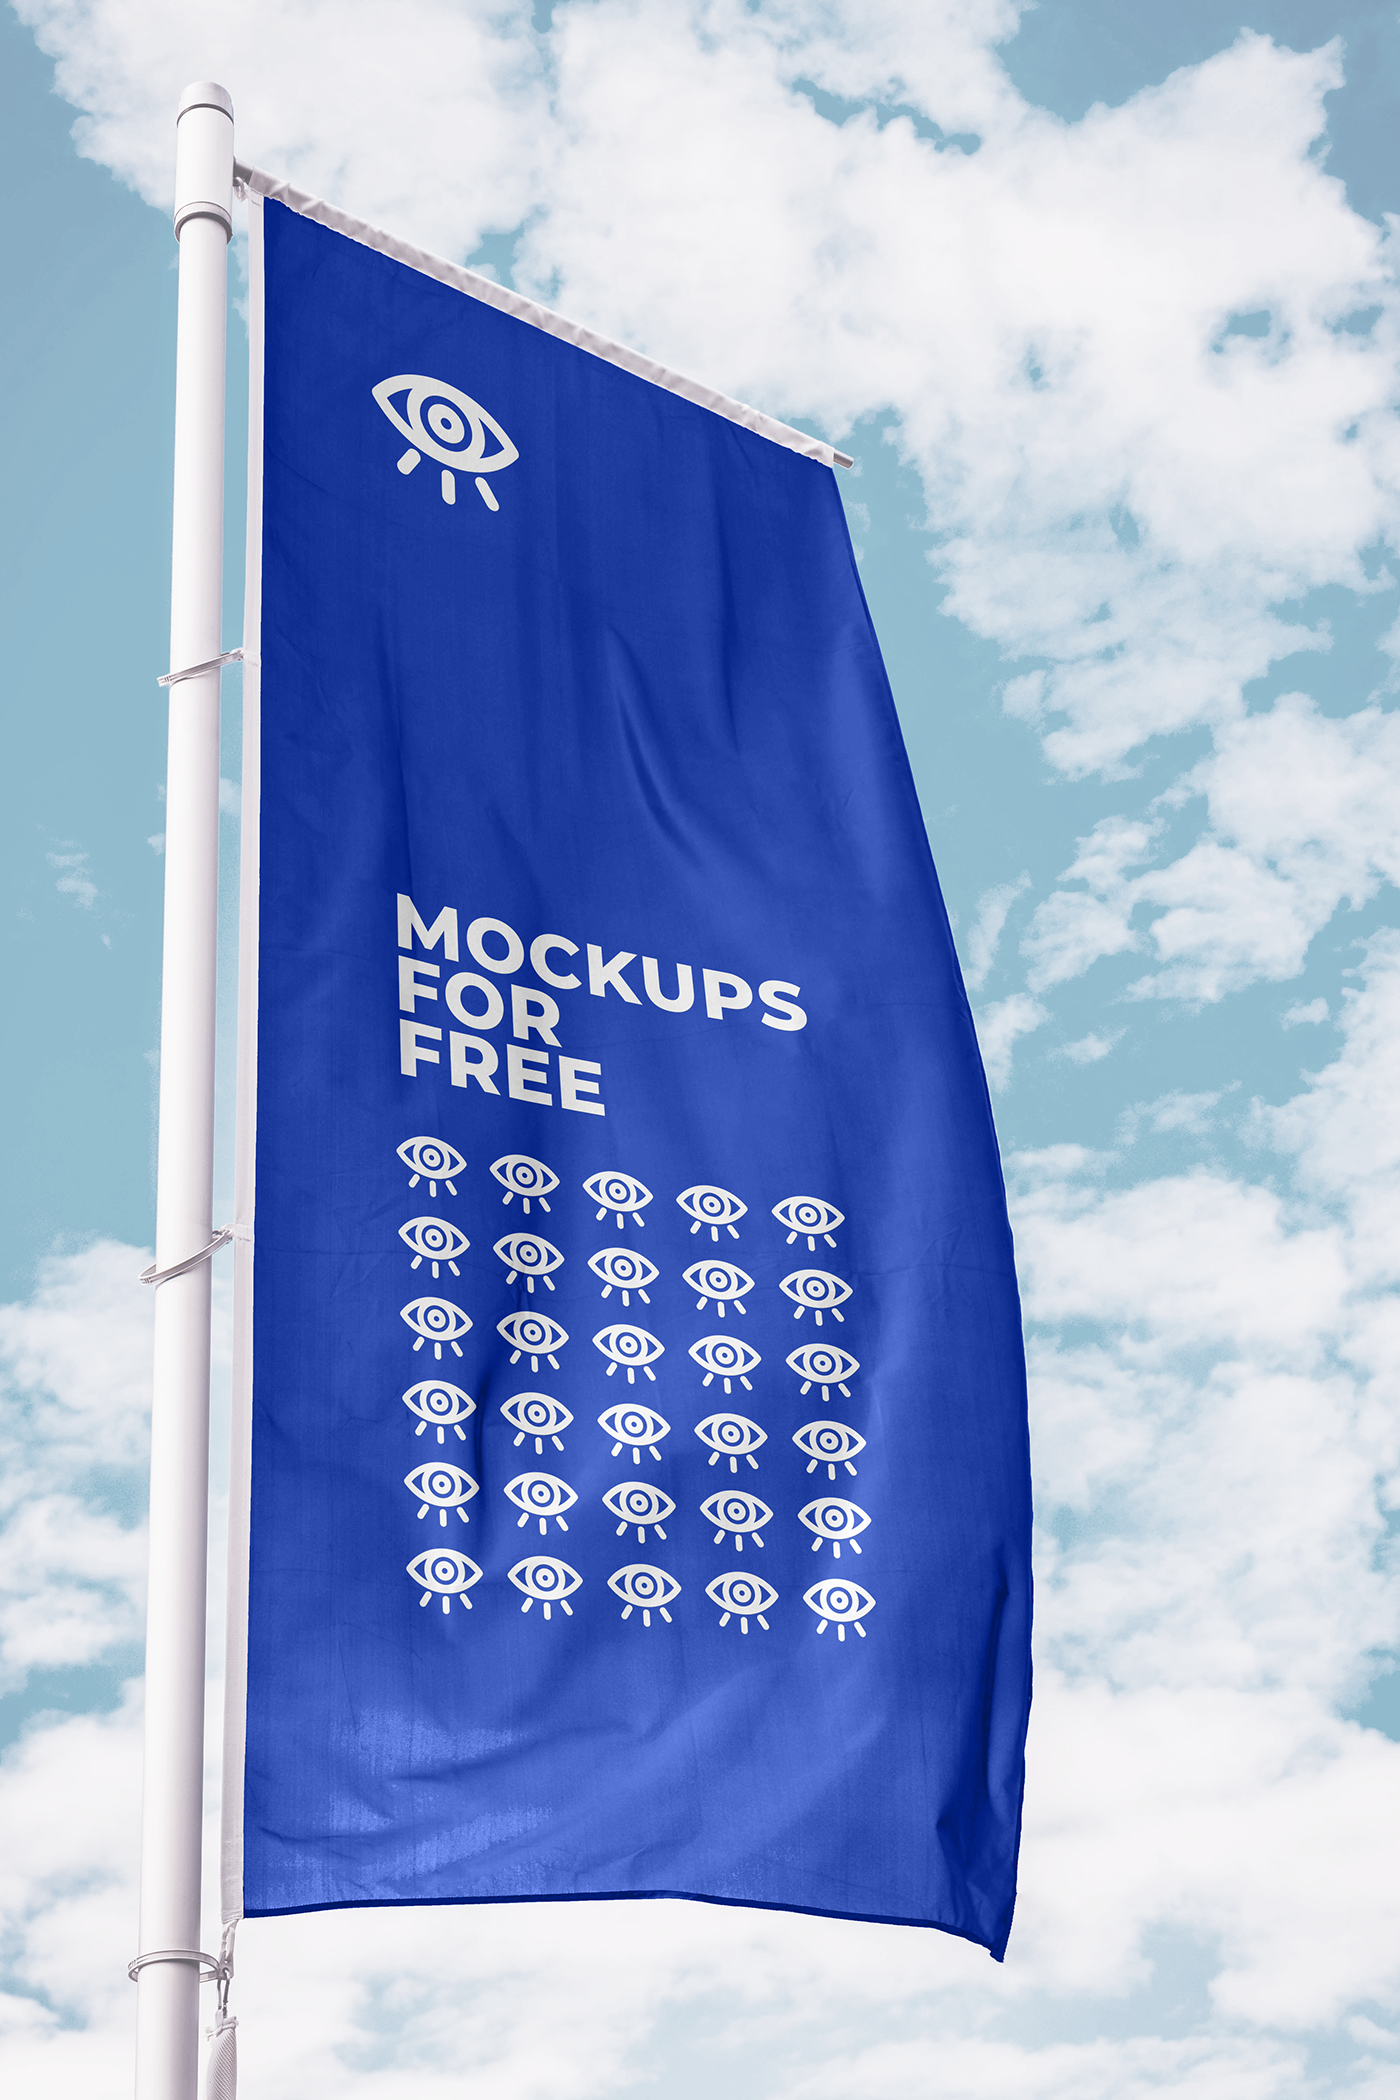 mockups freebies flag download corporate Logo presentation